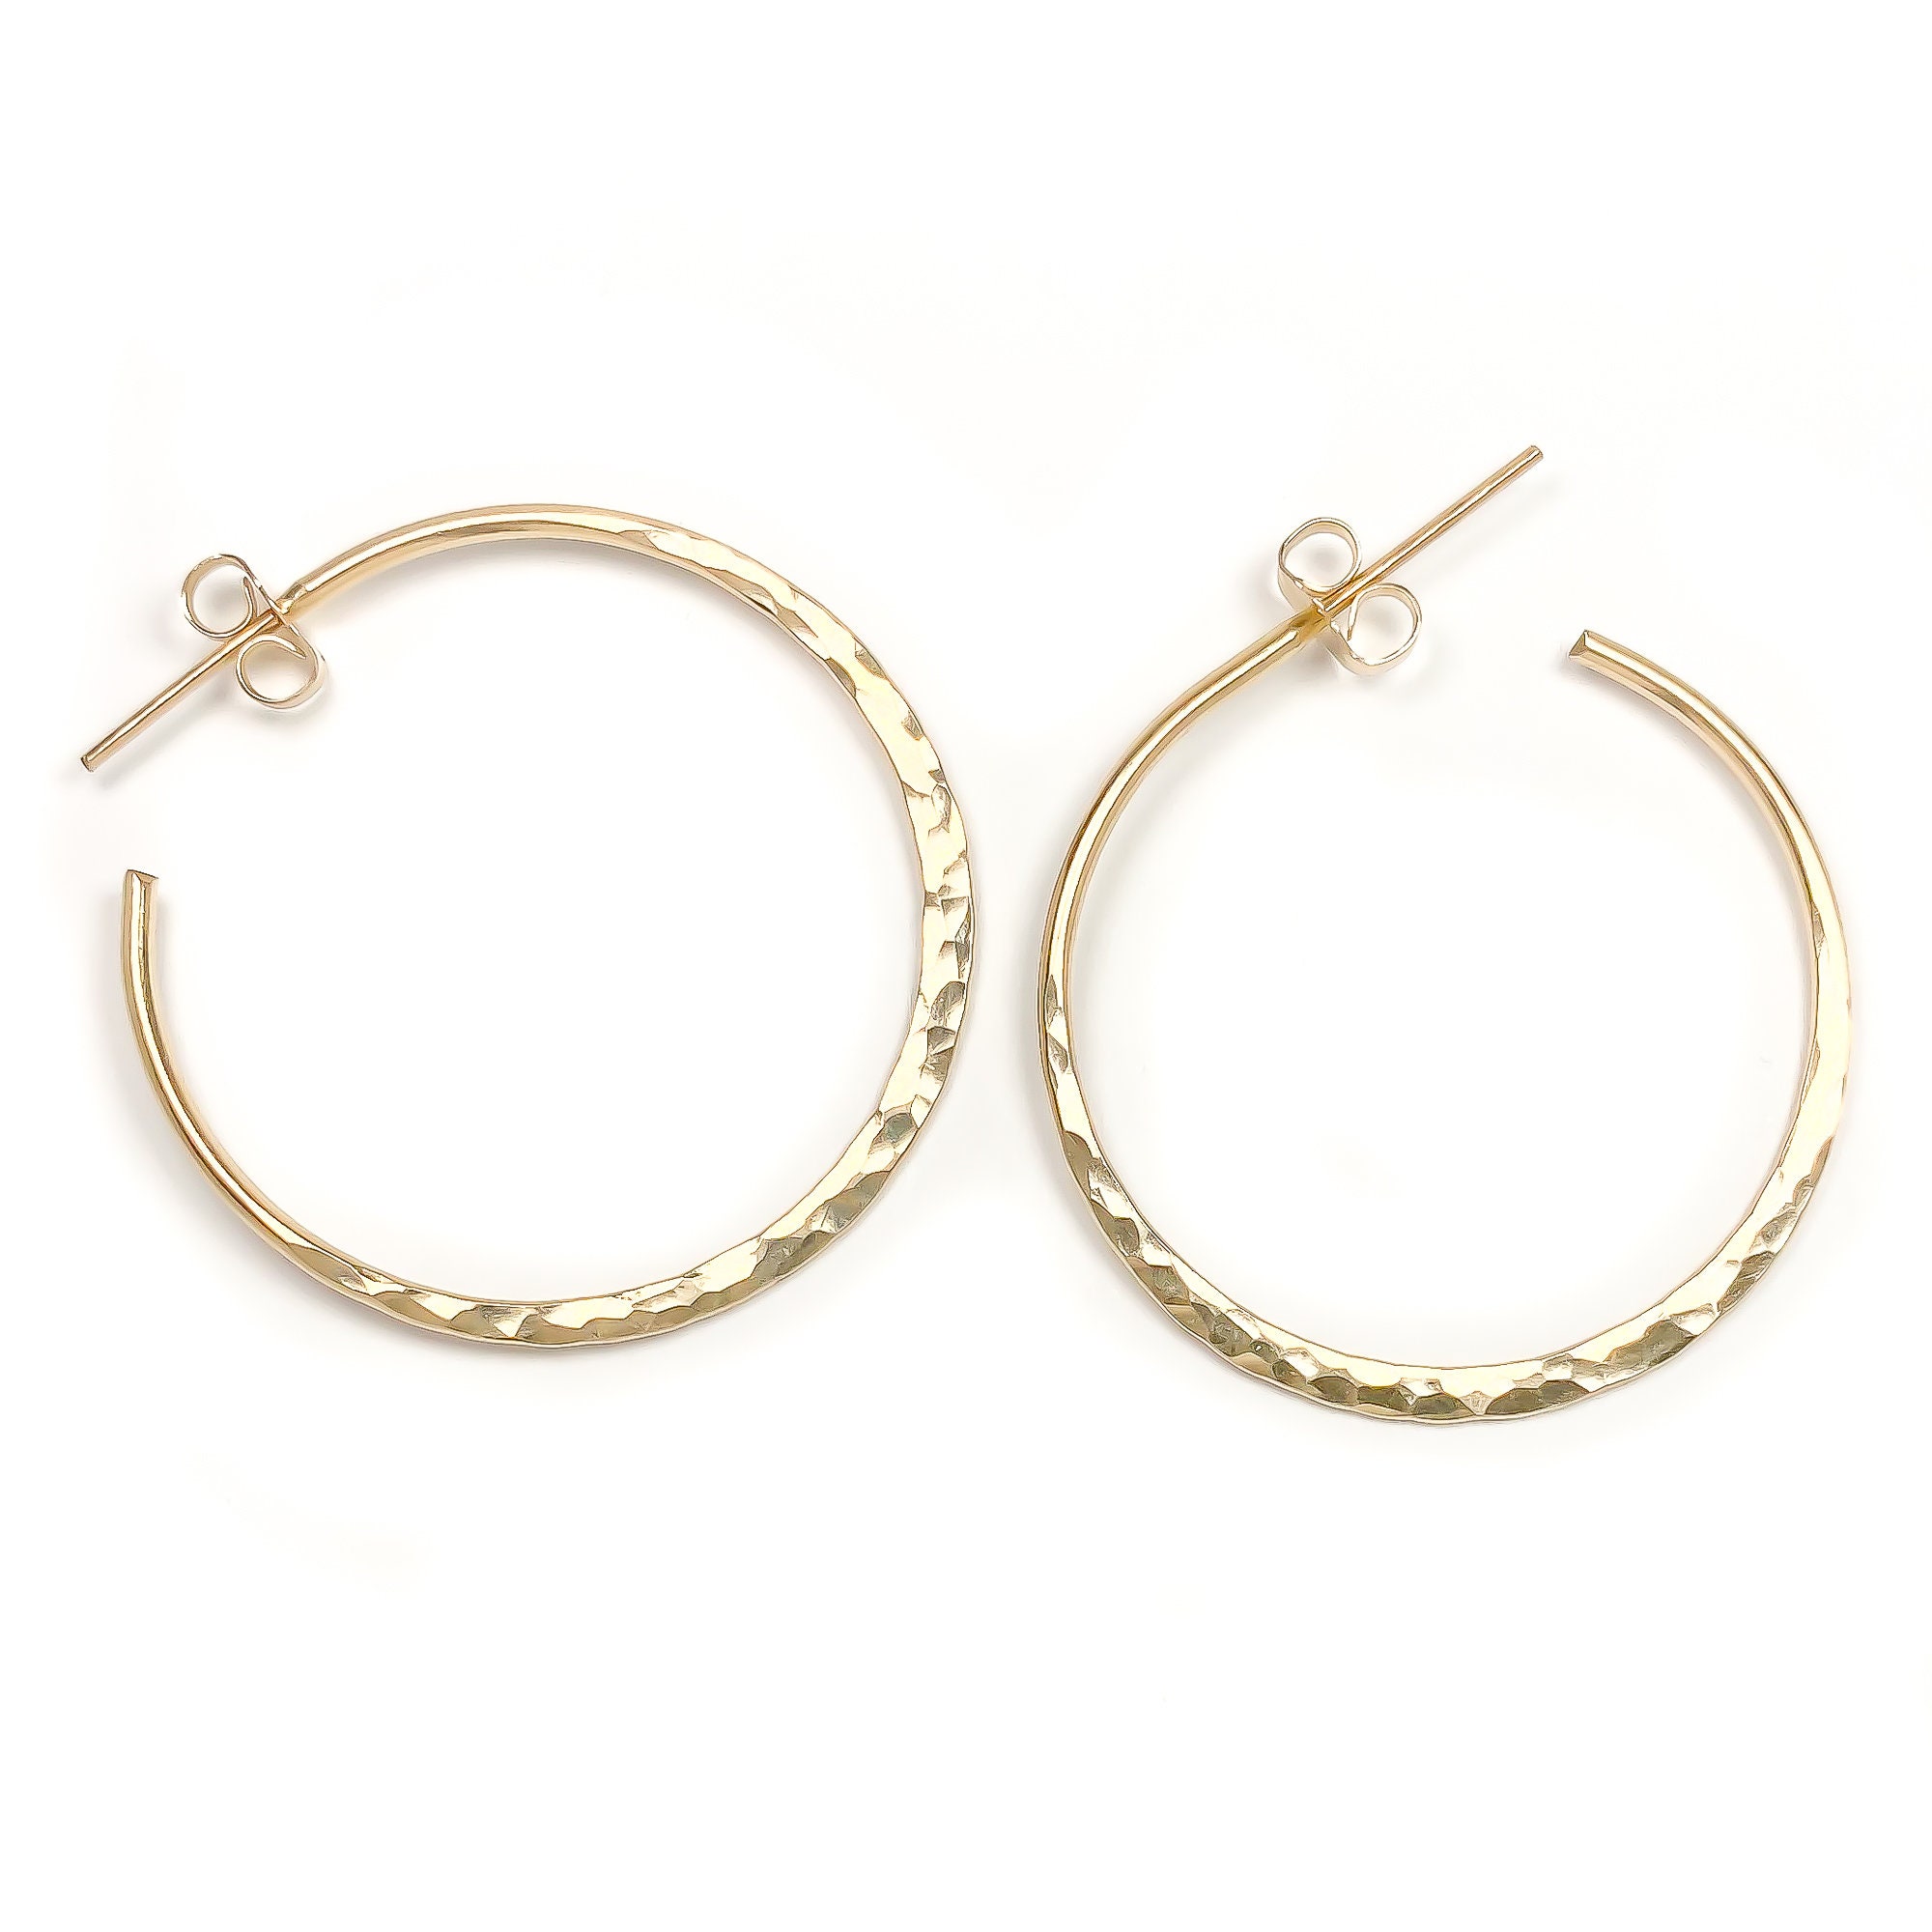 Hammered Gold Hoop Earrings 14K Gold Filled Hoops Gold - Etsy